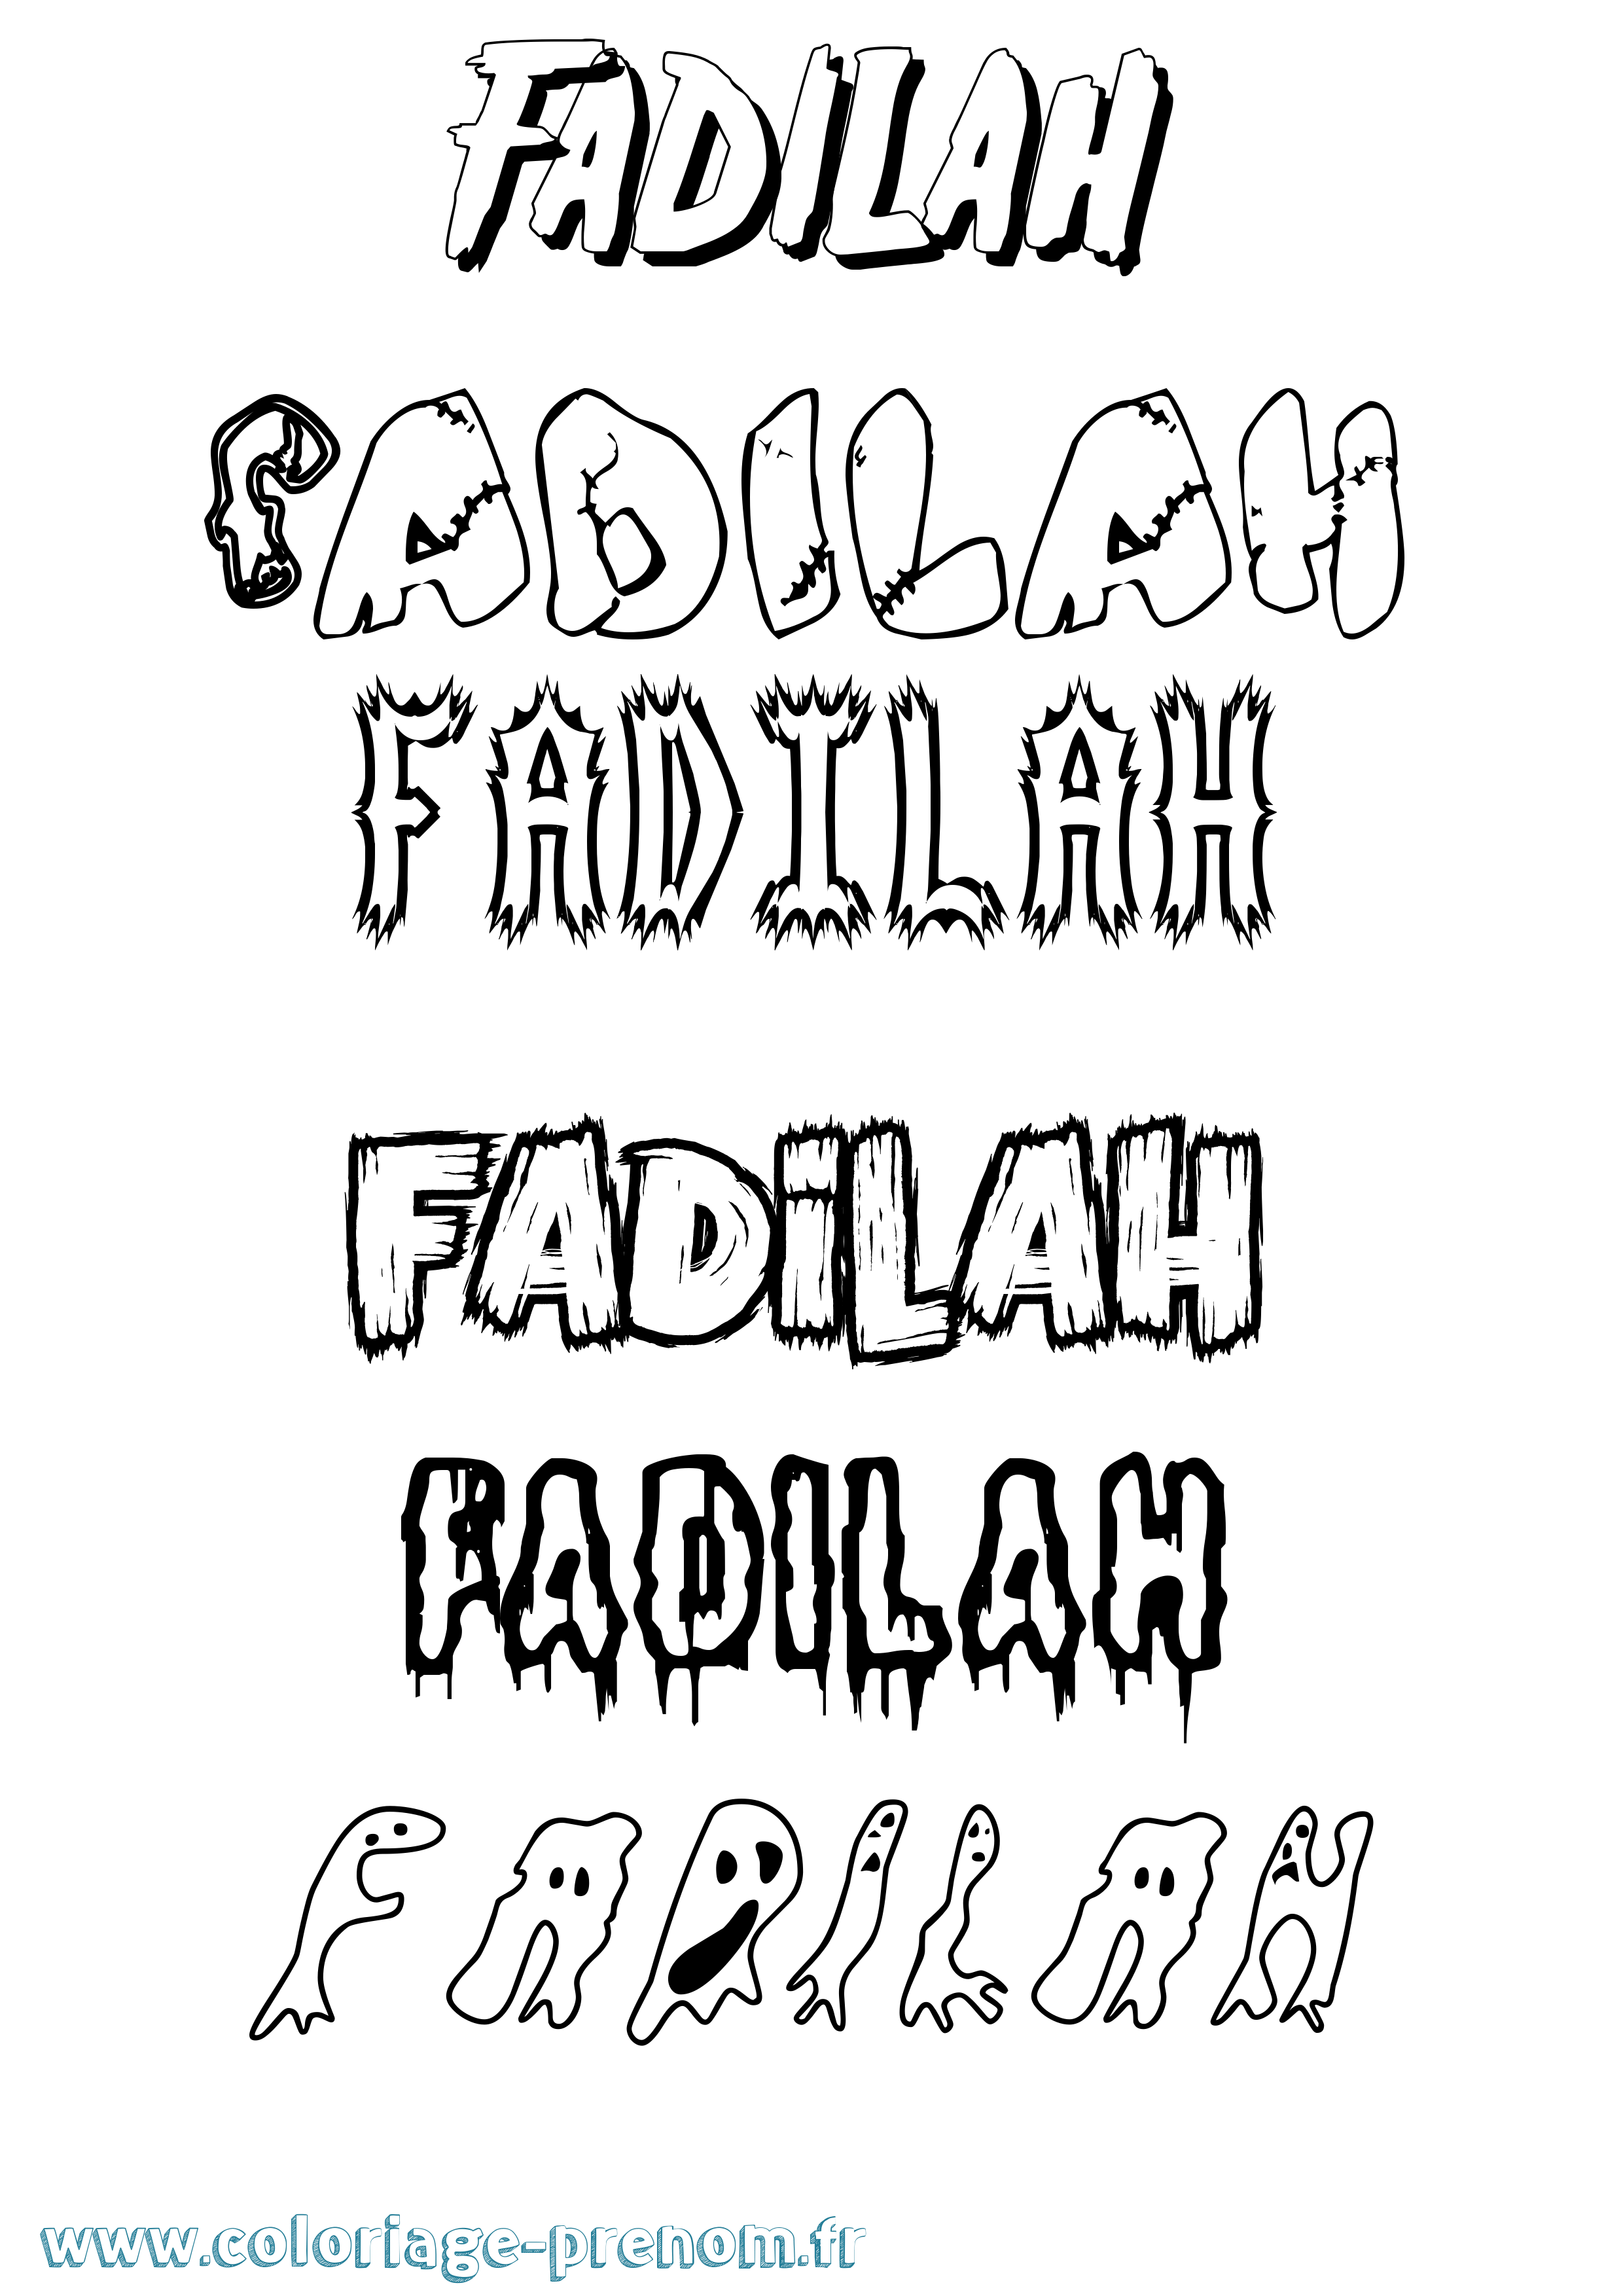 Coloriage prénom Fadilah Frisson